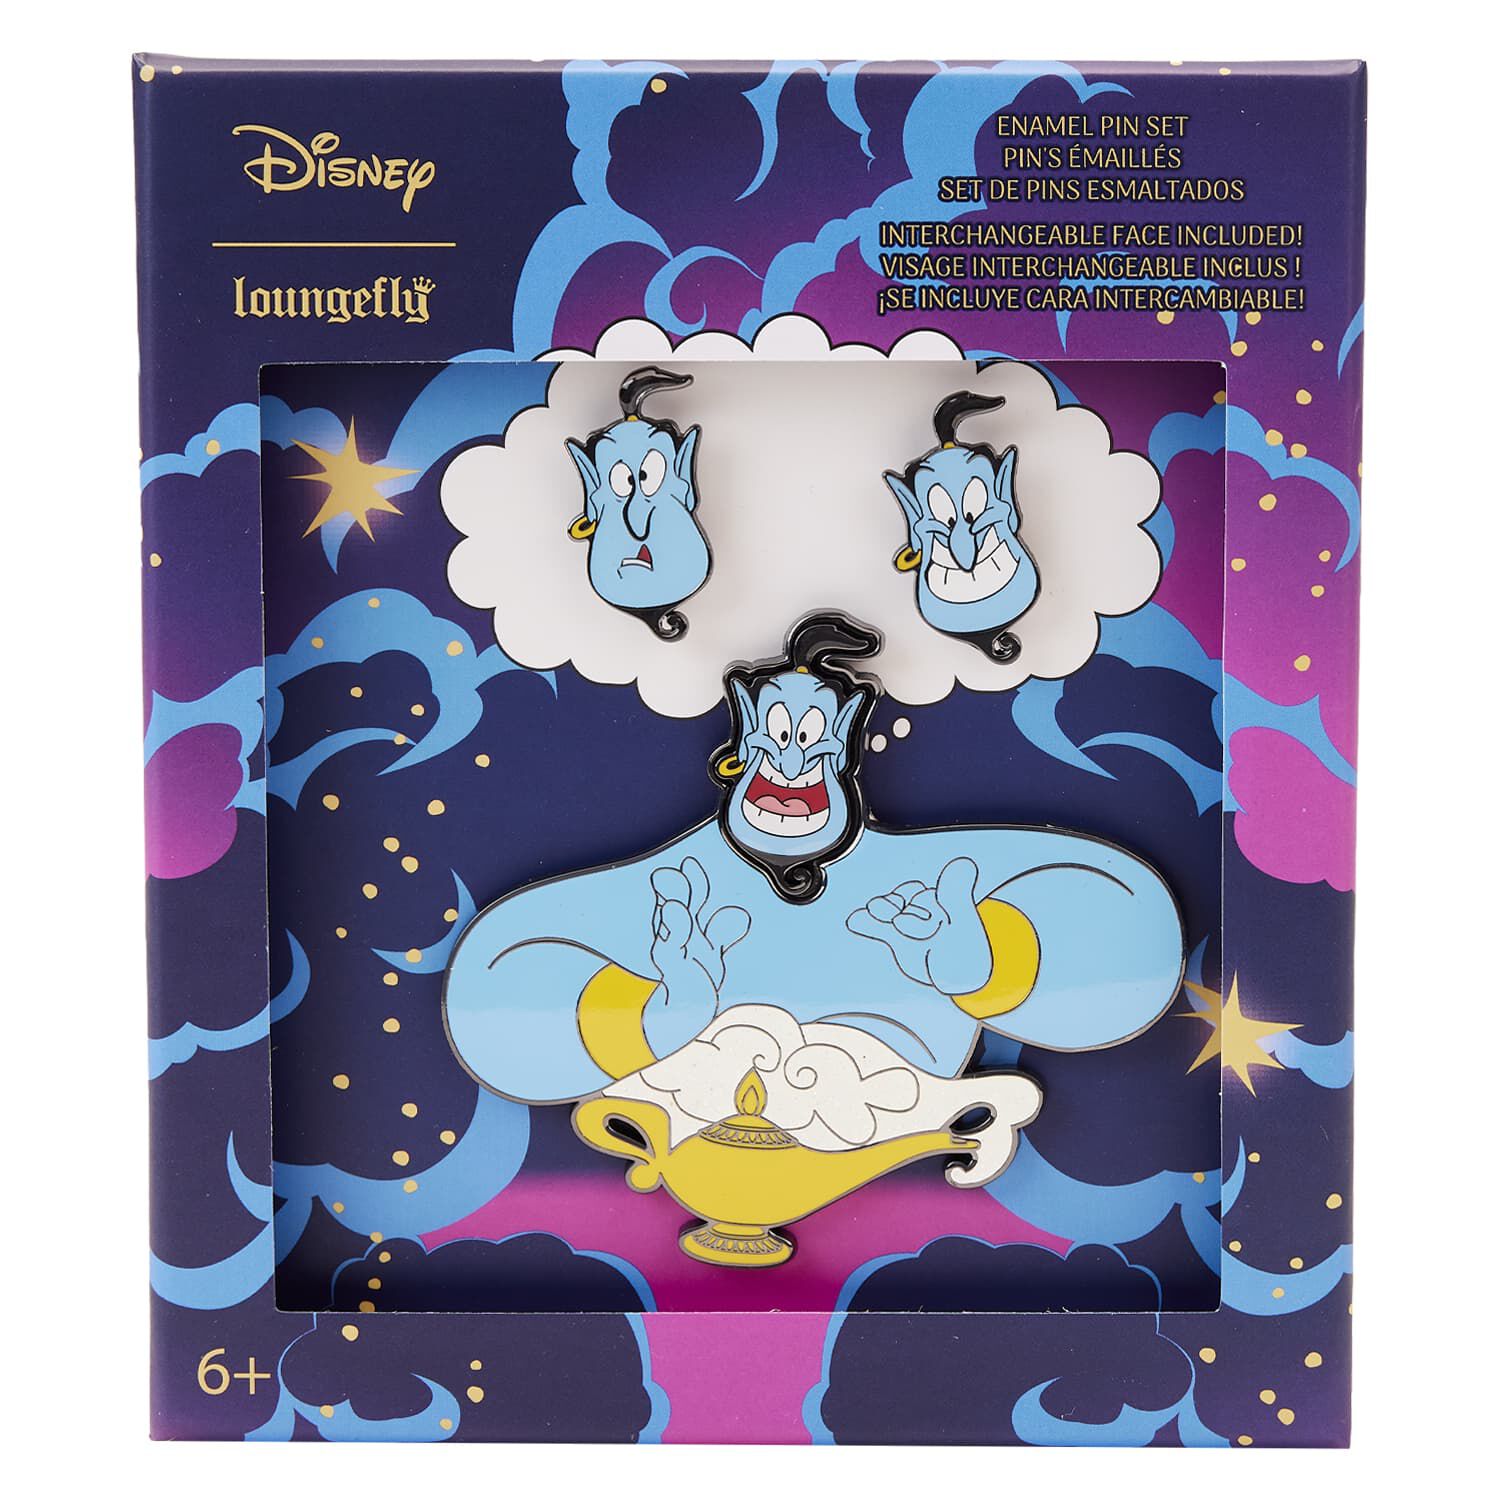 Aladdin Genie Mixed Emotions 4pc Pin Set